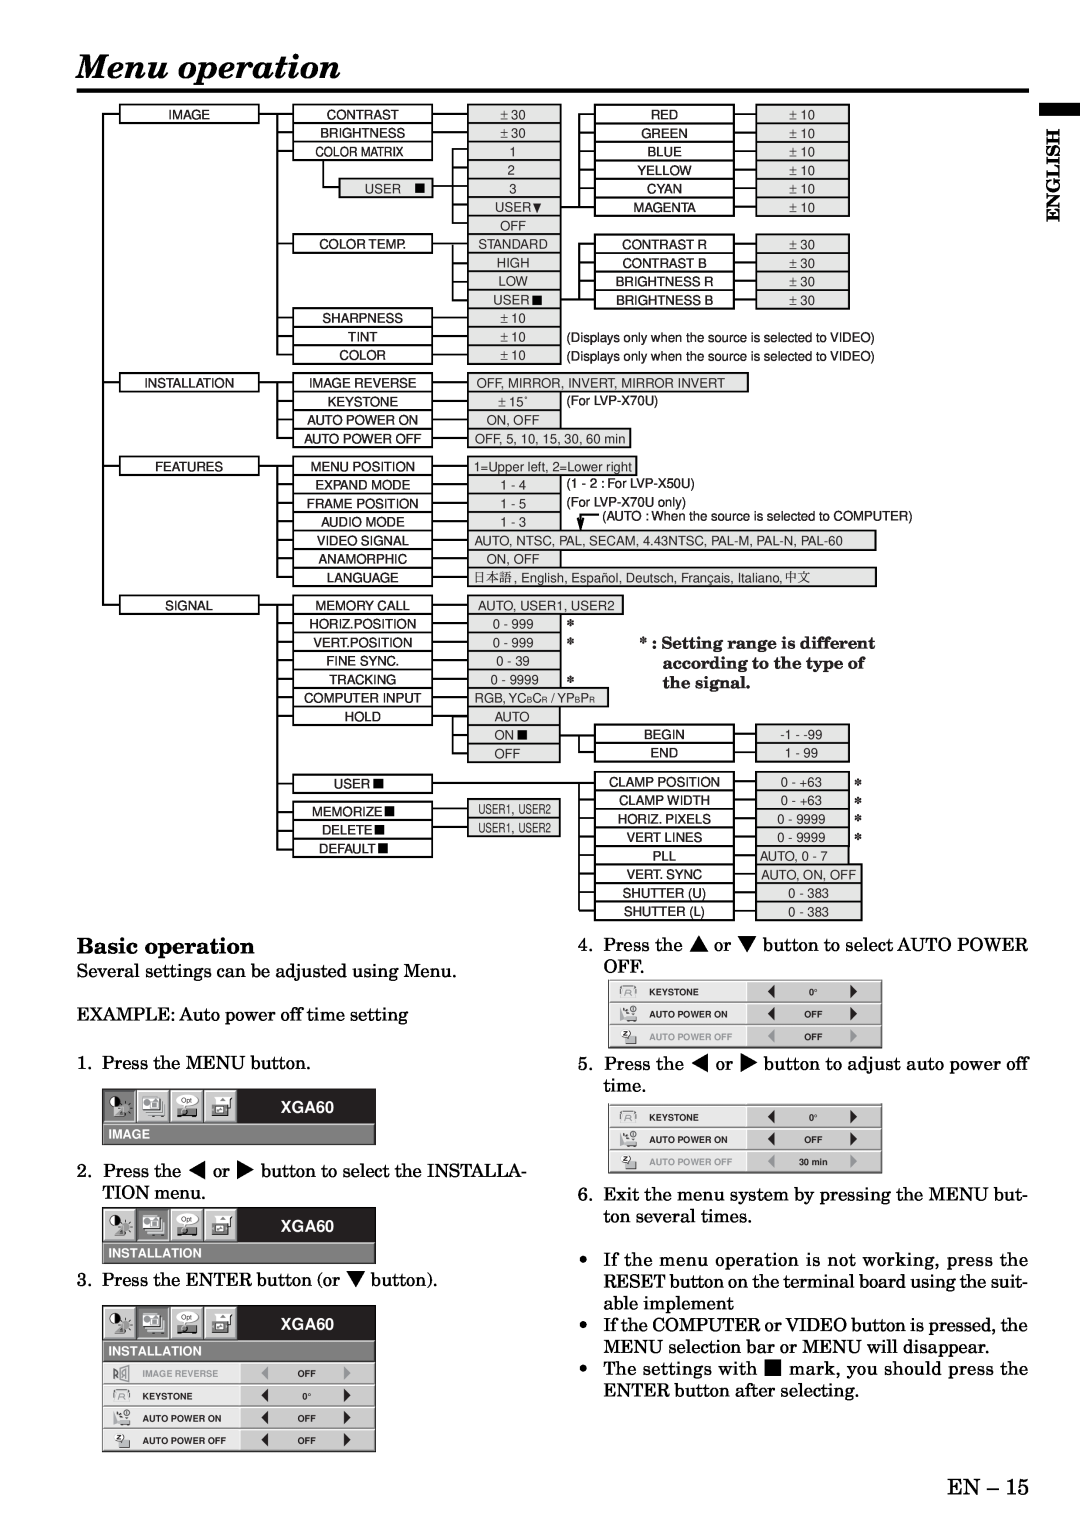 Mitsubishi Electronics X70, X50 user manual Menu operation, Basic operation 